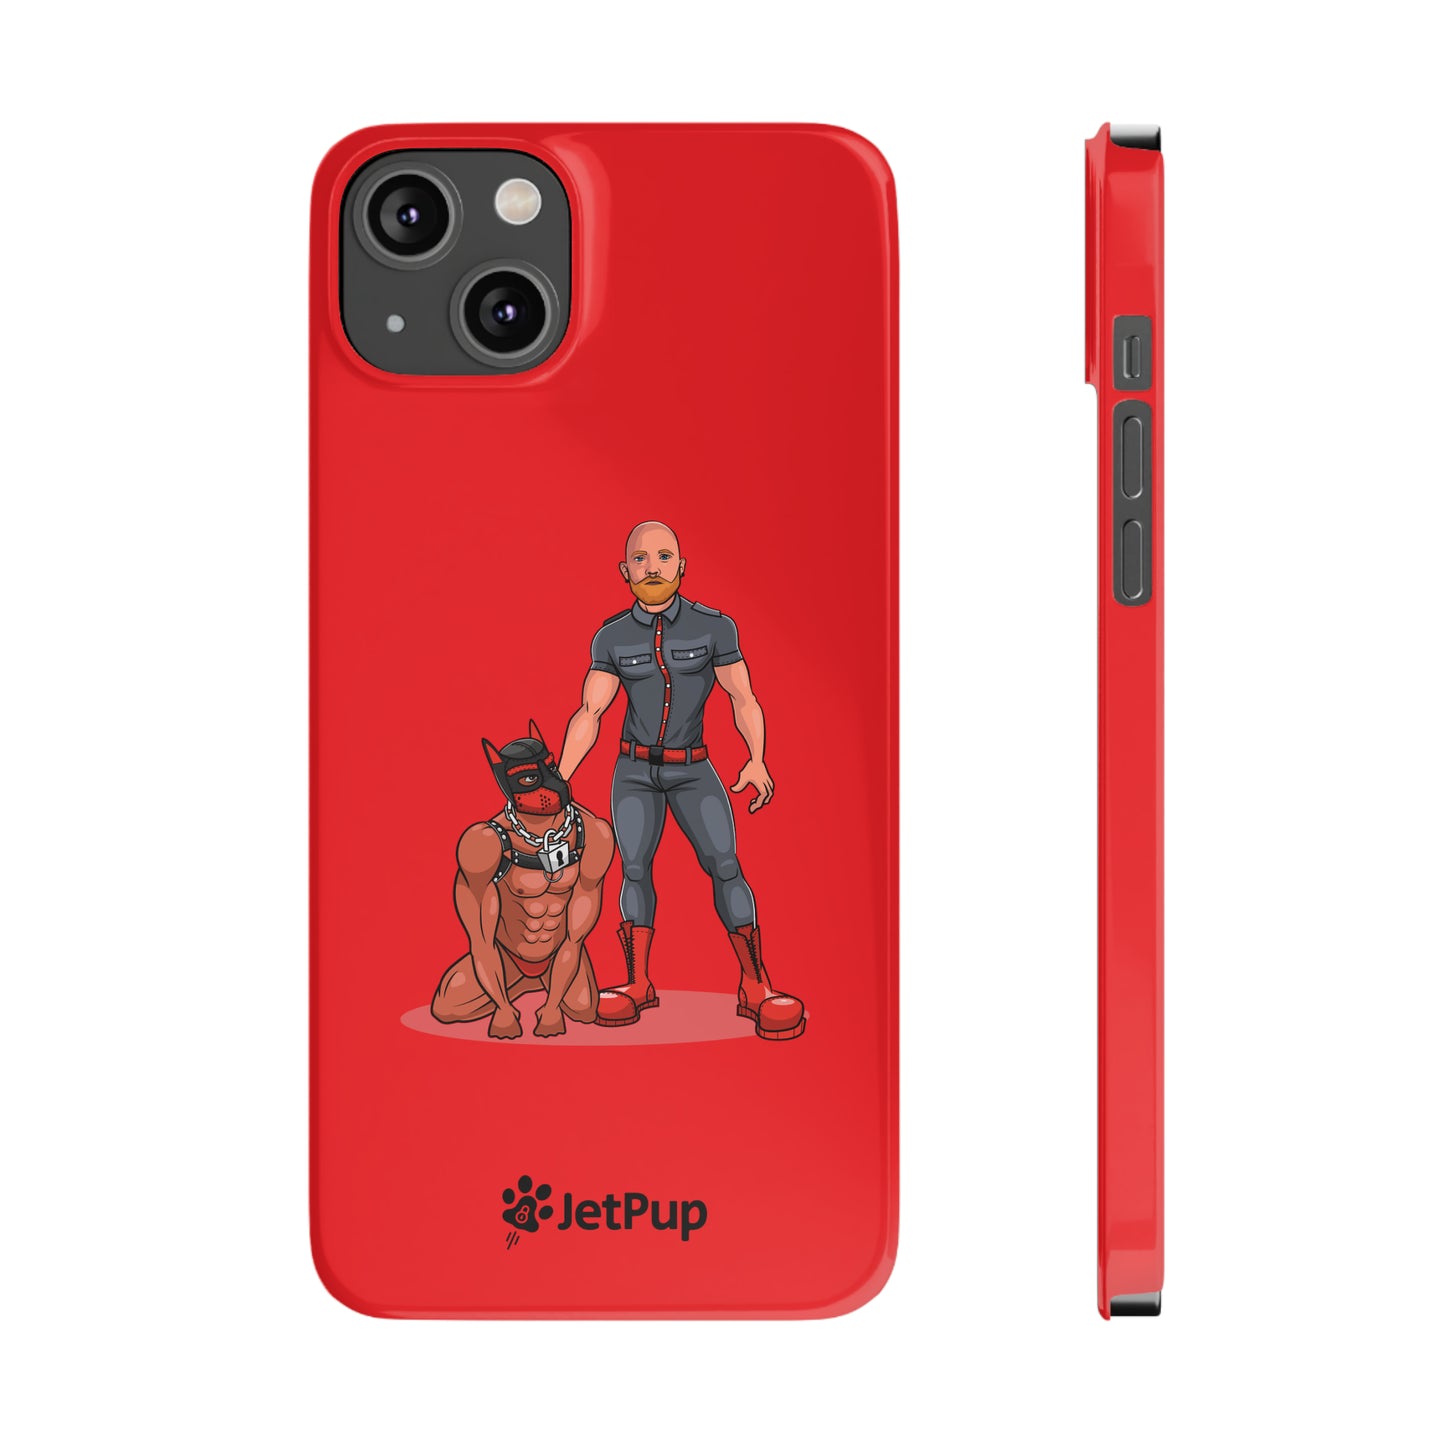 Dad & Pup Slim iPhone Cases - Red